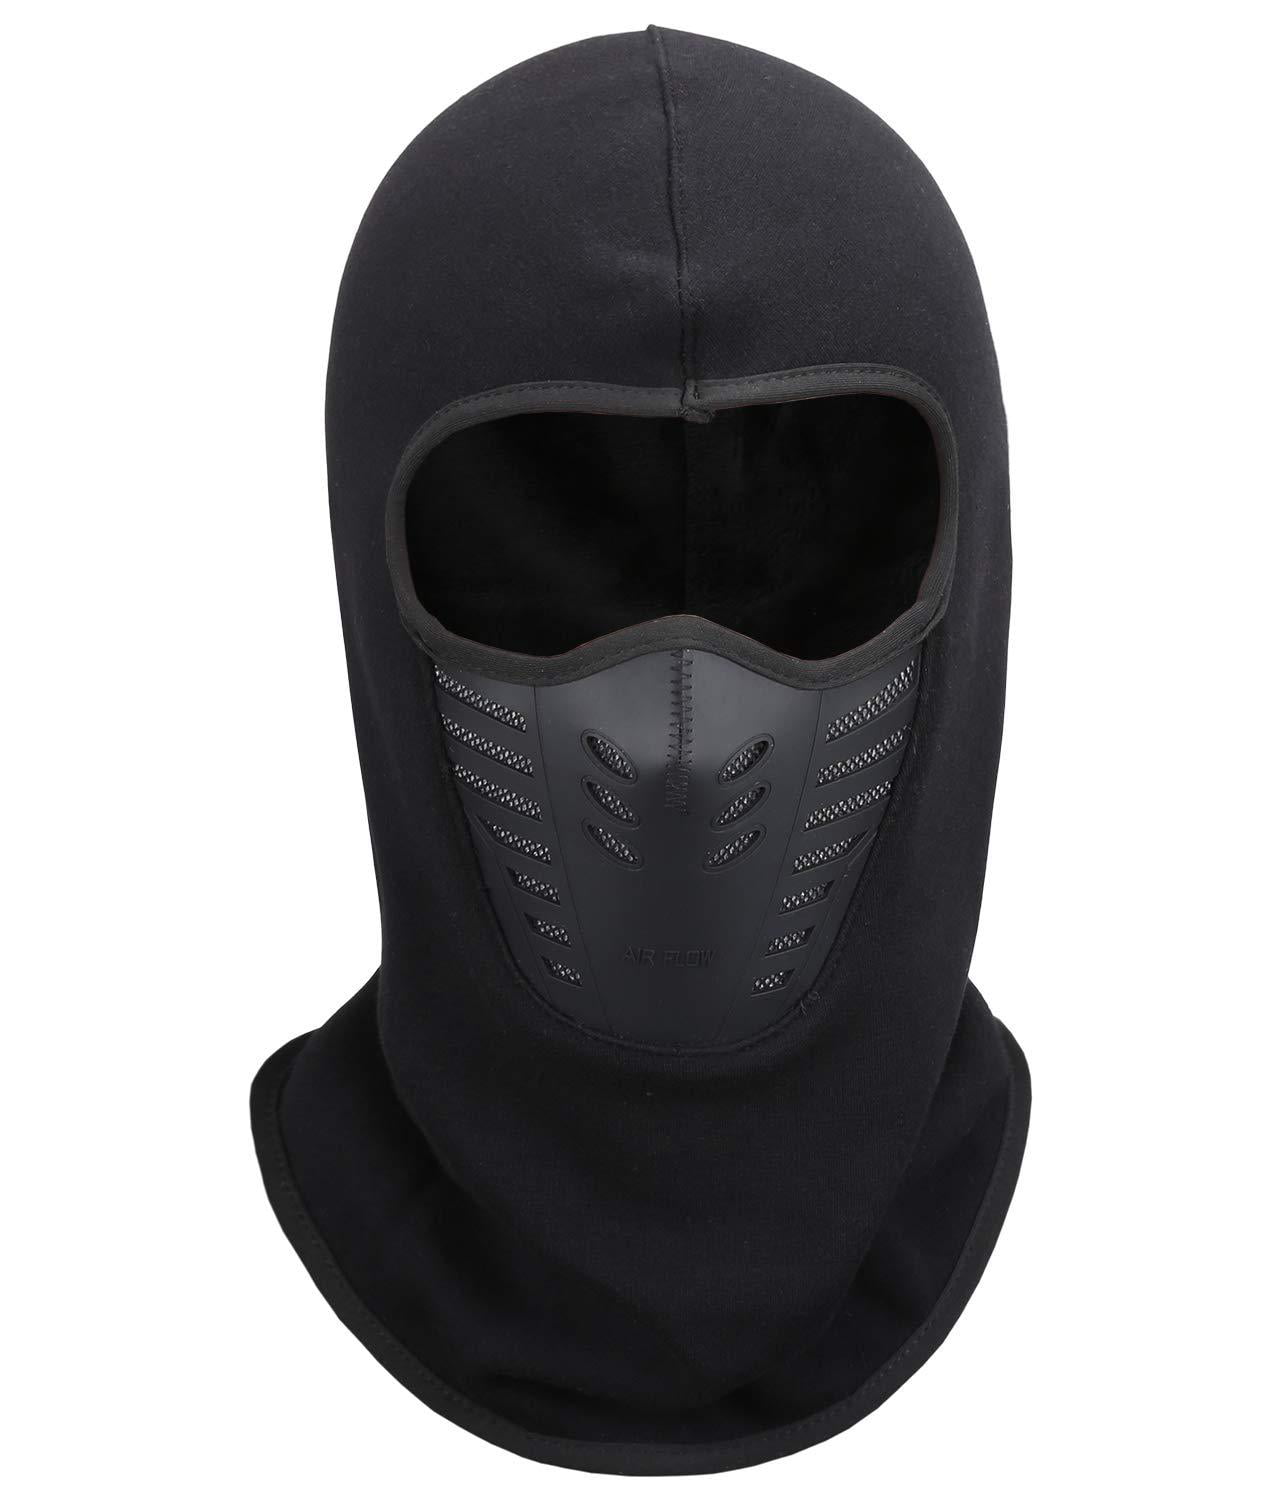 Winter Balaclava Face Mask Cold Weather Windproof Fleece Ski Mask for Men Women 